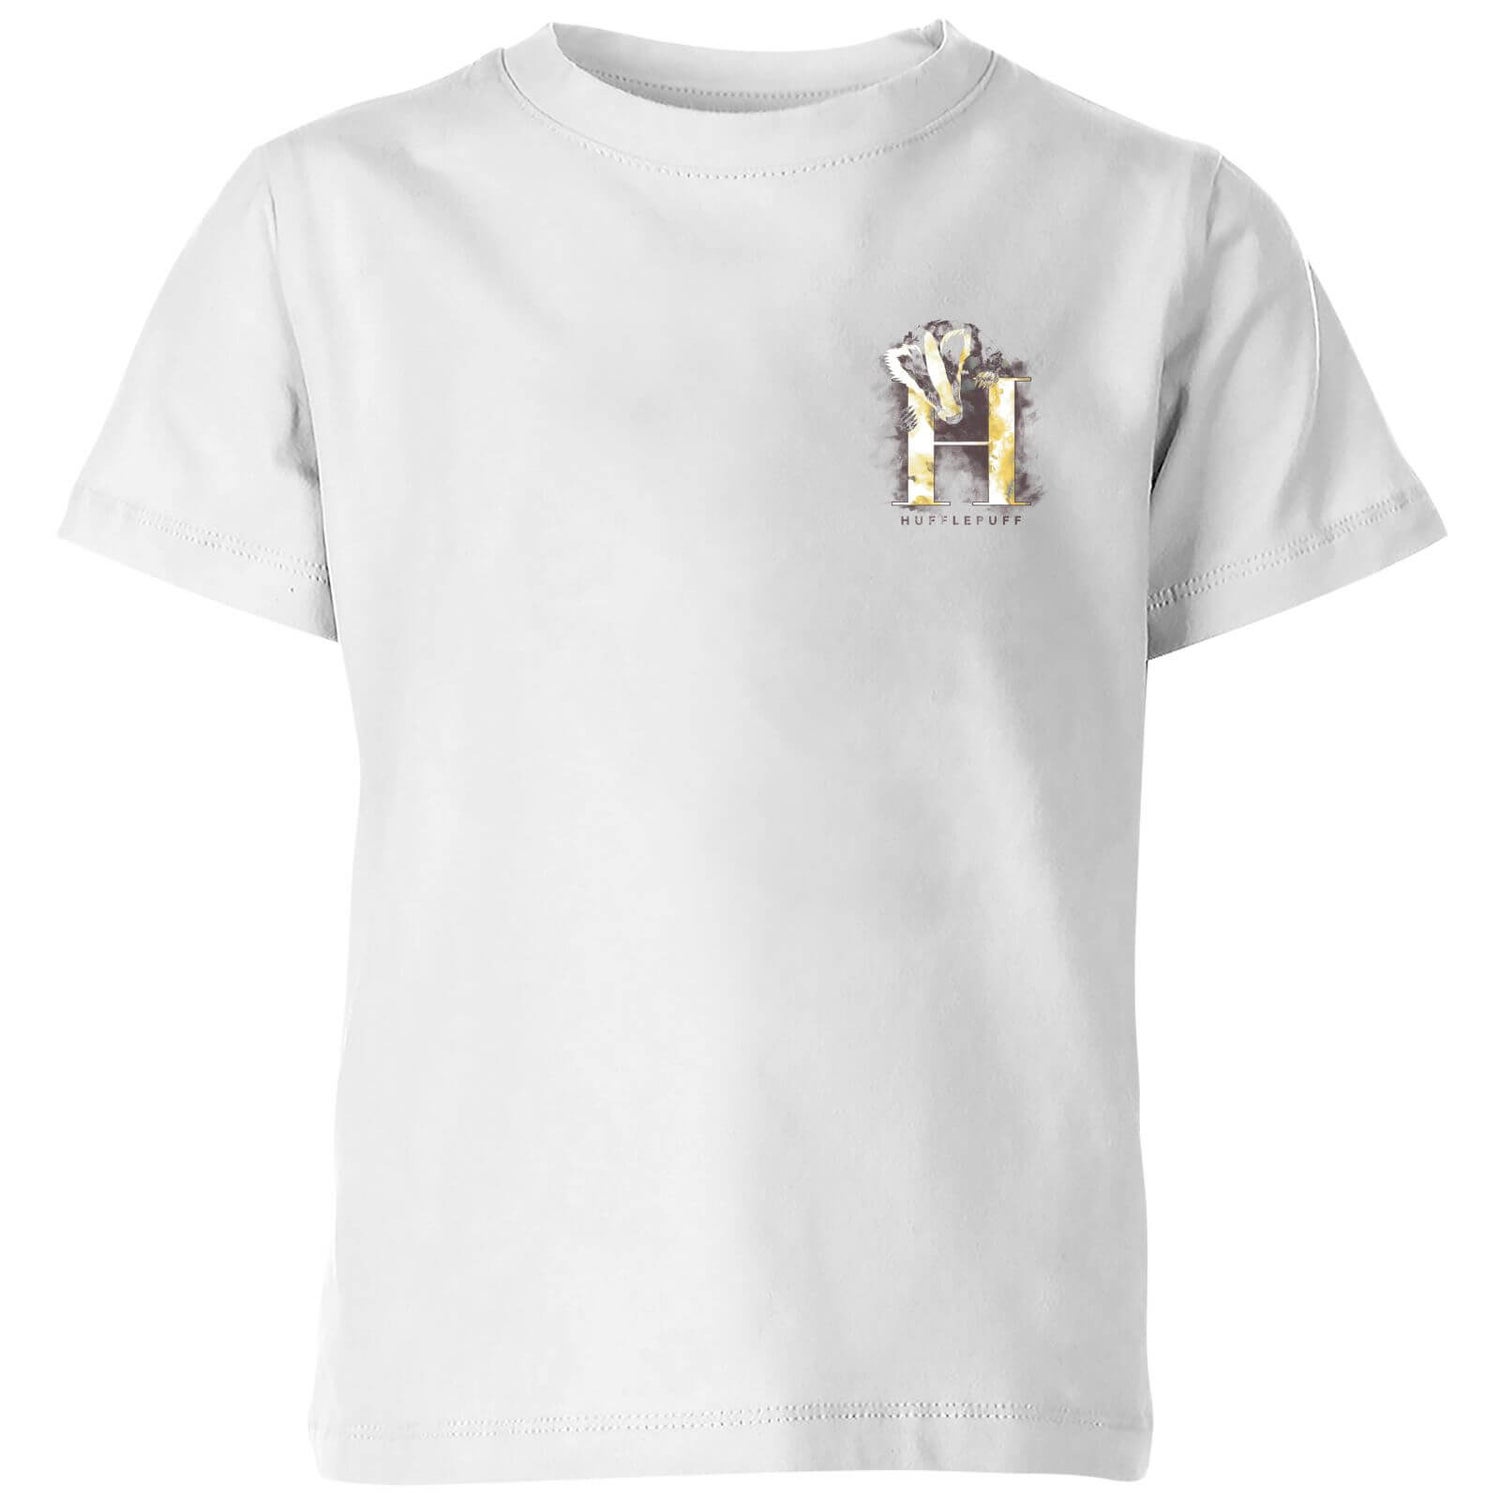 Harry Potter Hufflepuff Kids' T-Shirt - White